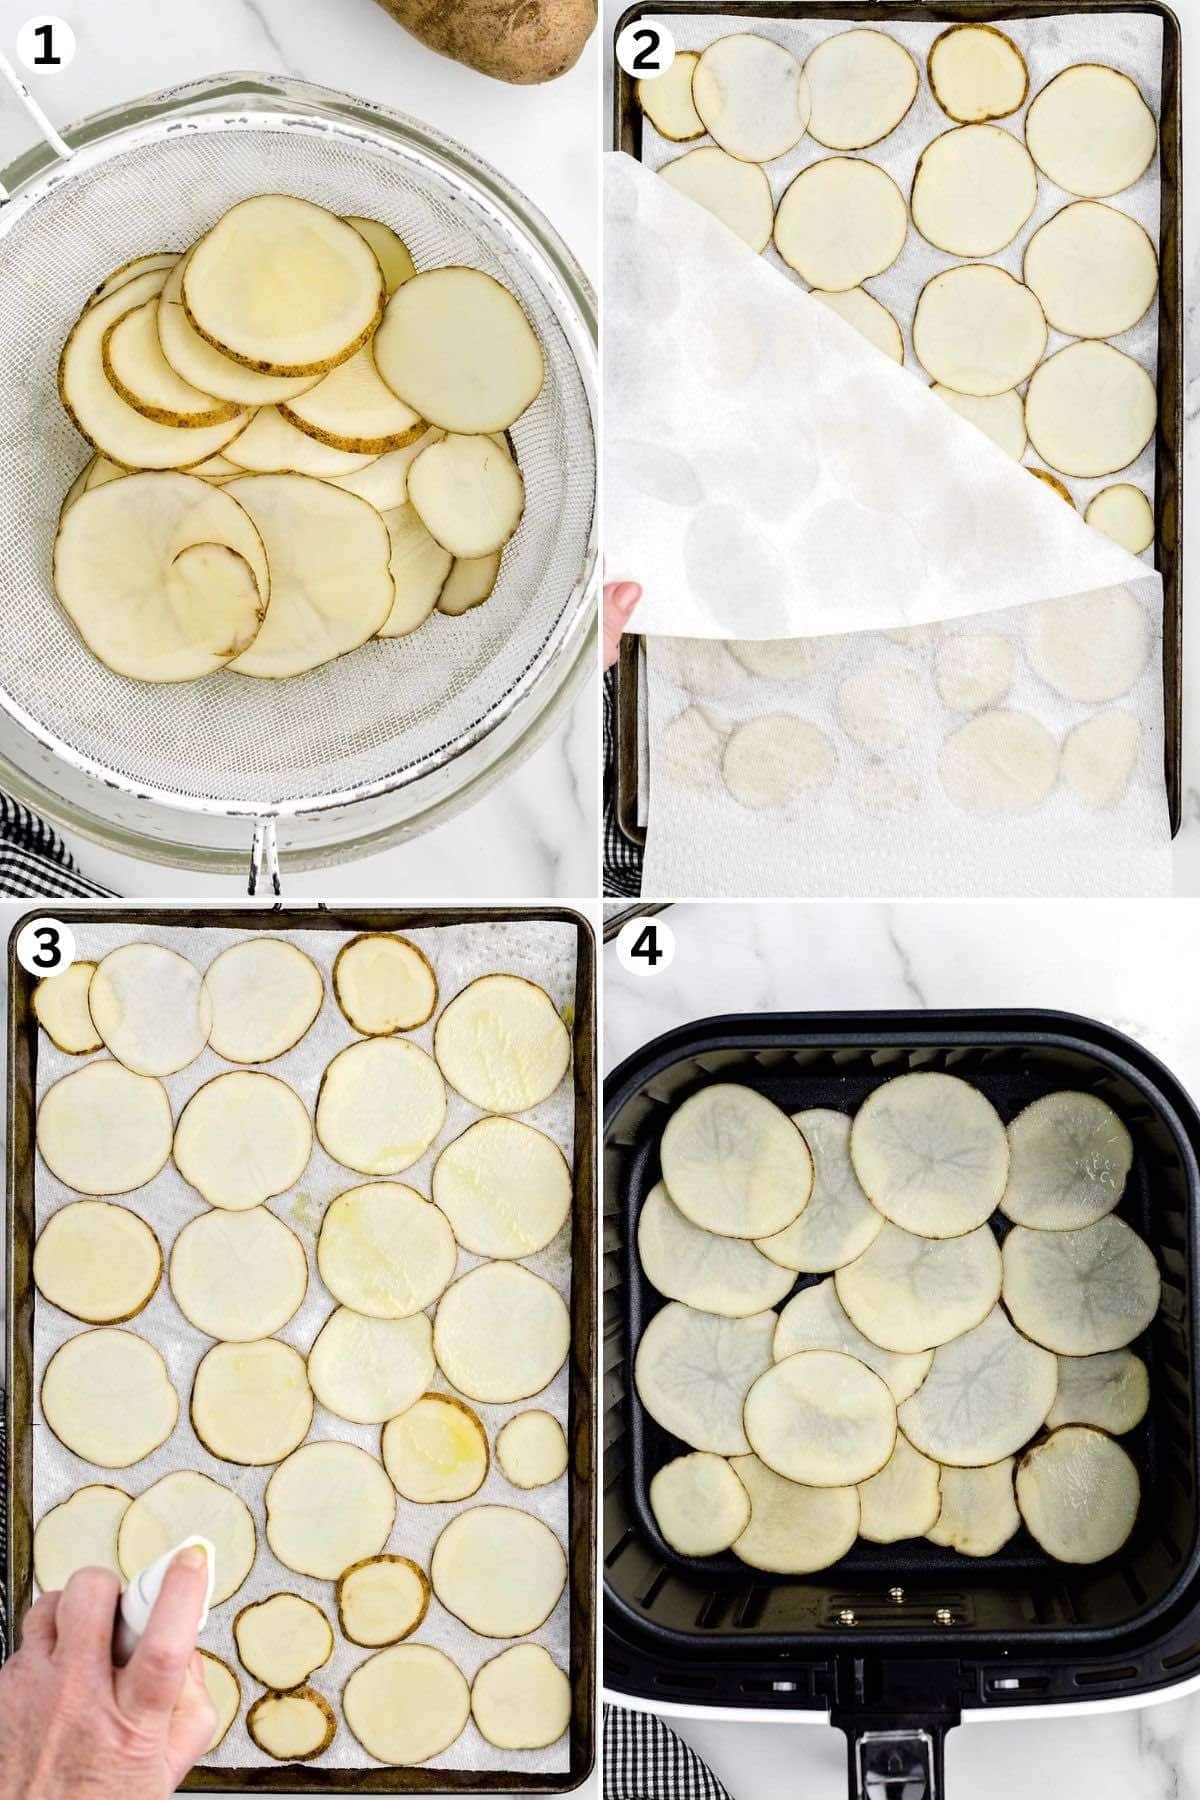 slice, soak the potatoes. pat dry with paper towel. add in air fryer basket.